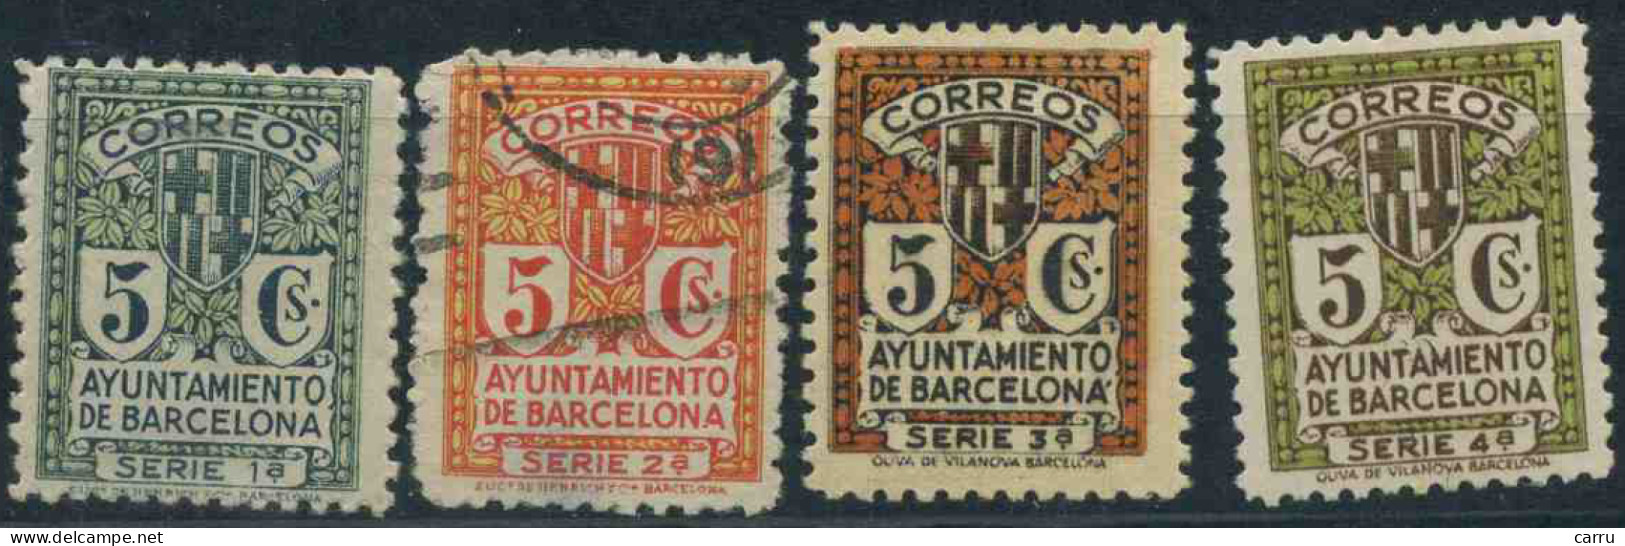 España - Barcelona - 1932-1935 - Barcelona